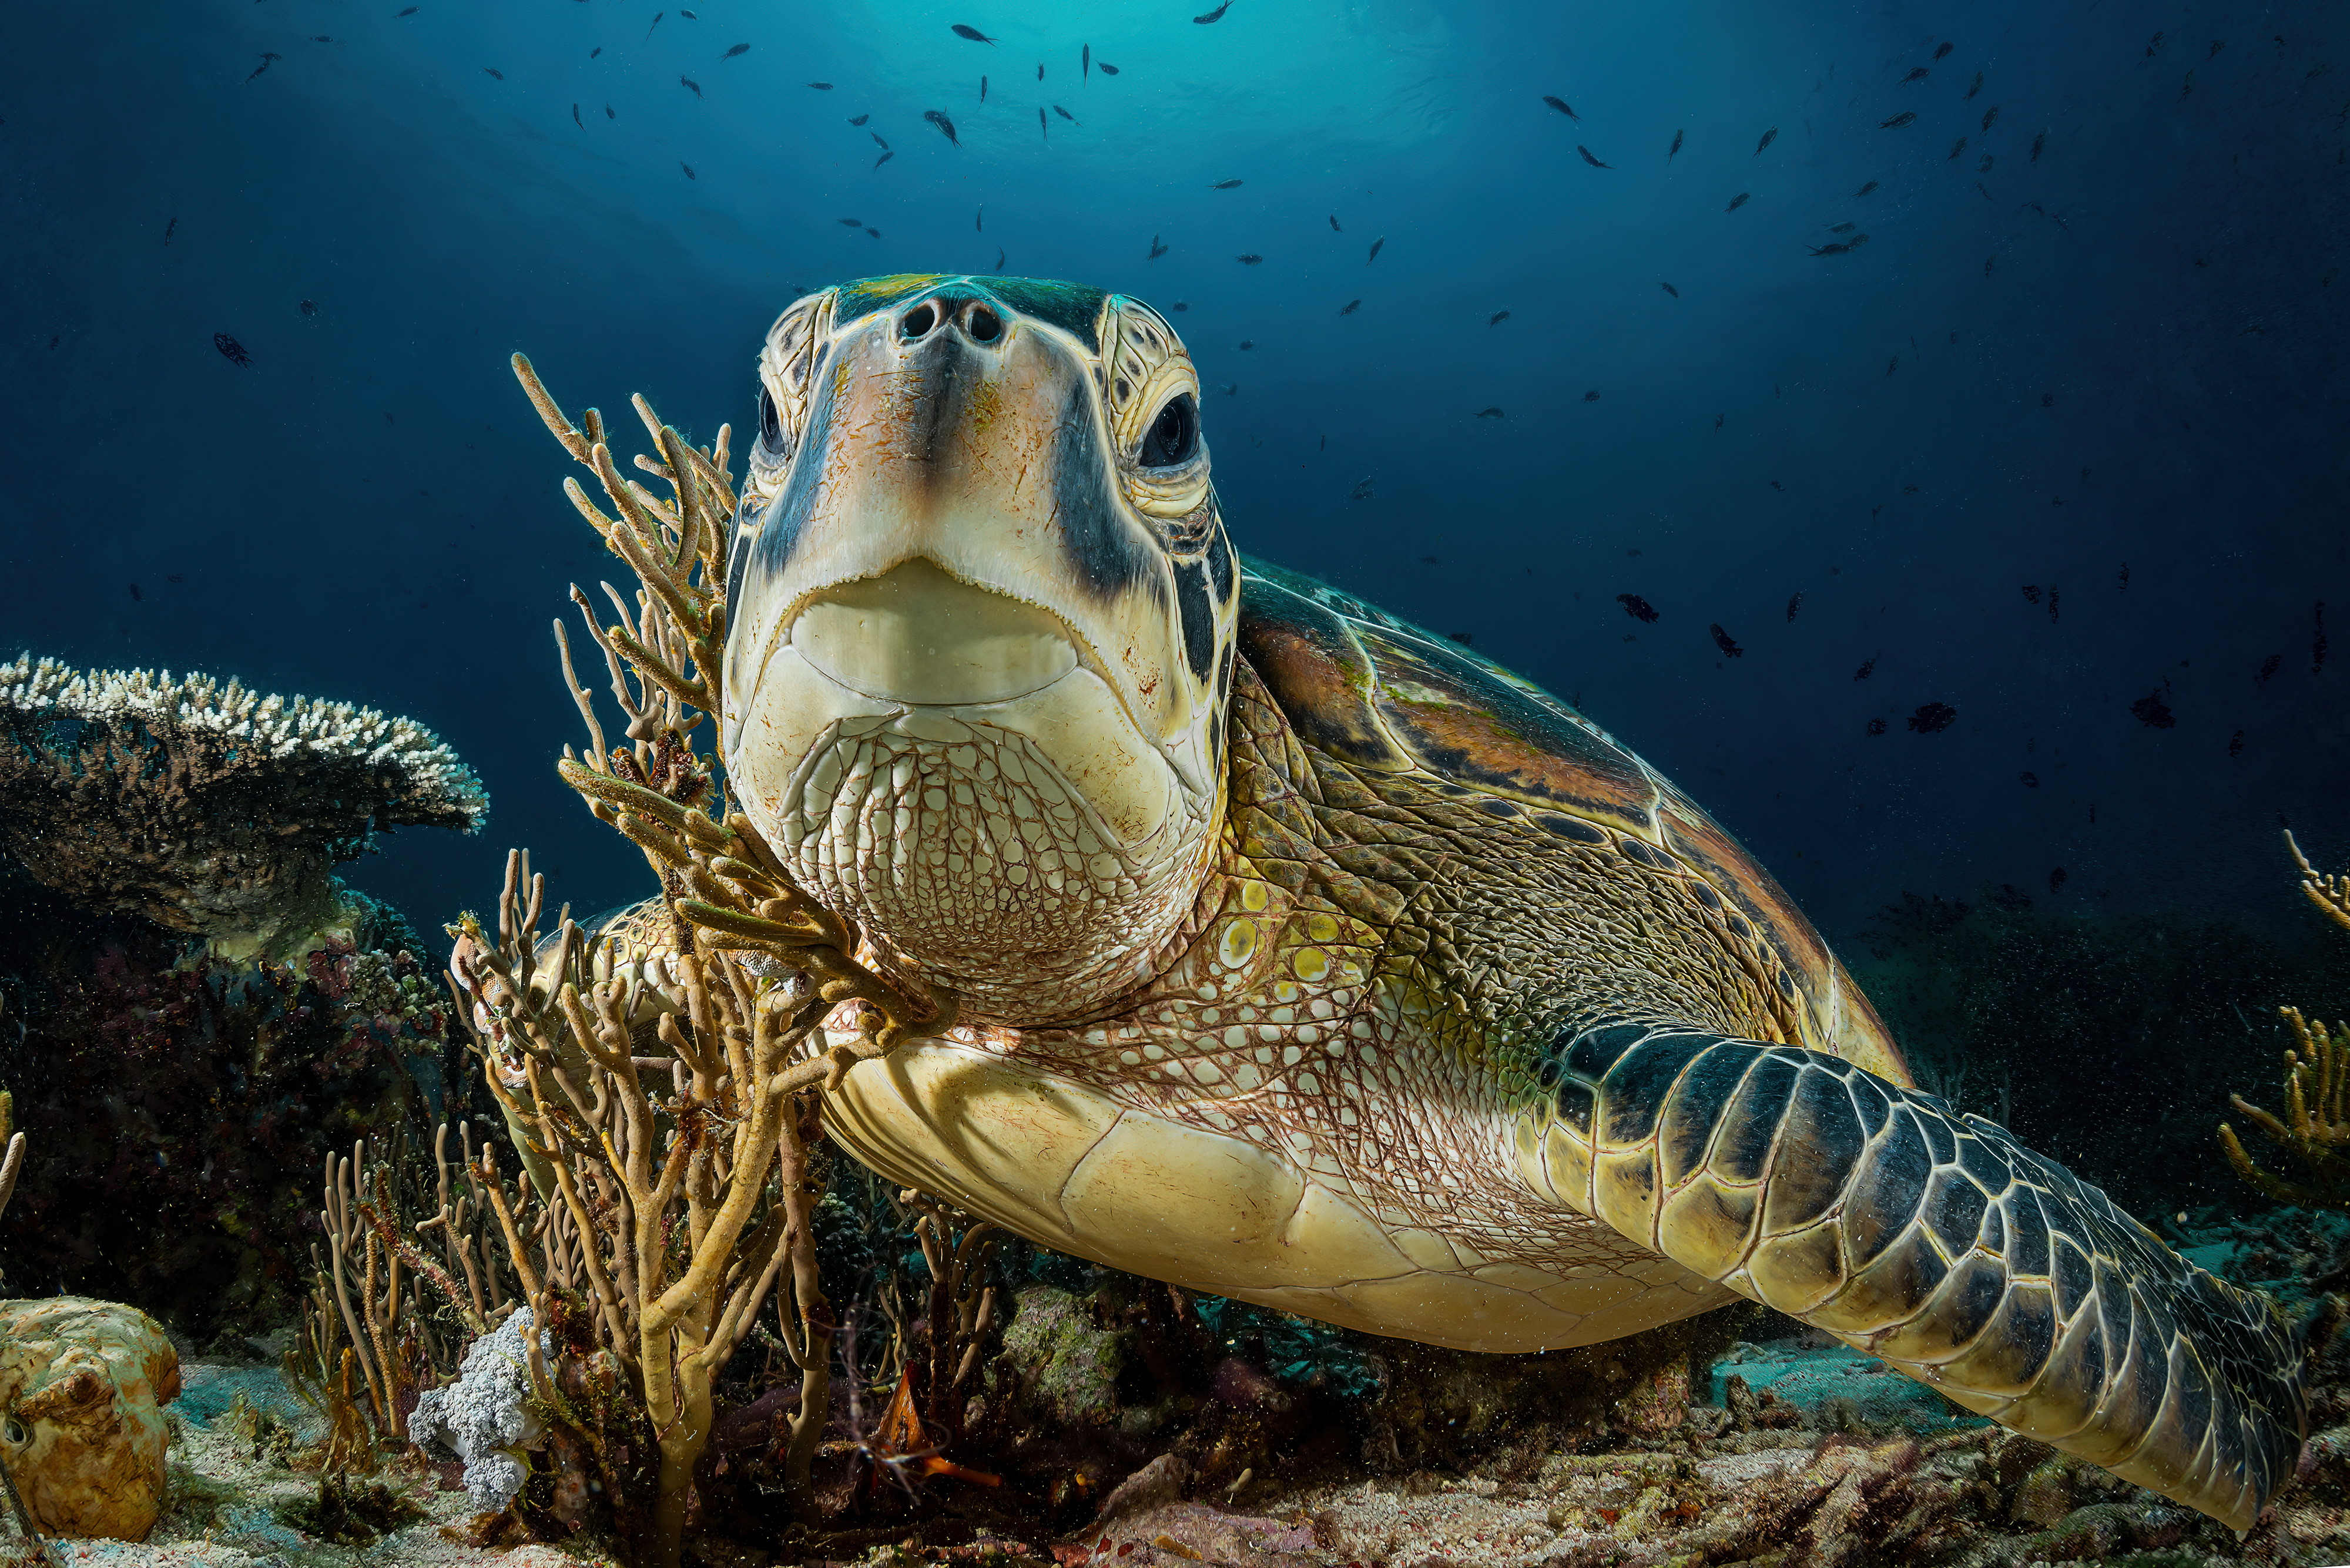 Portrait de tortue marine